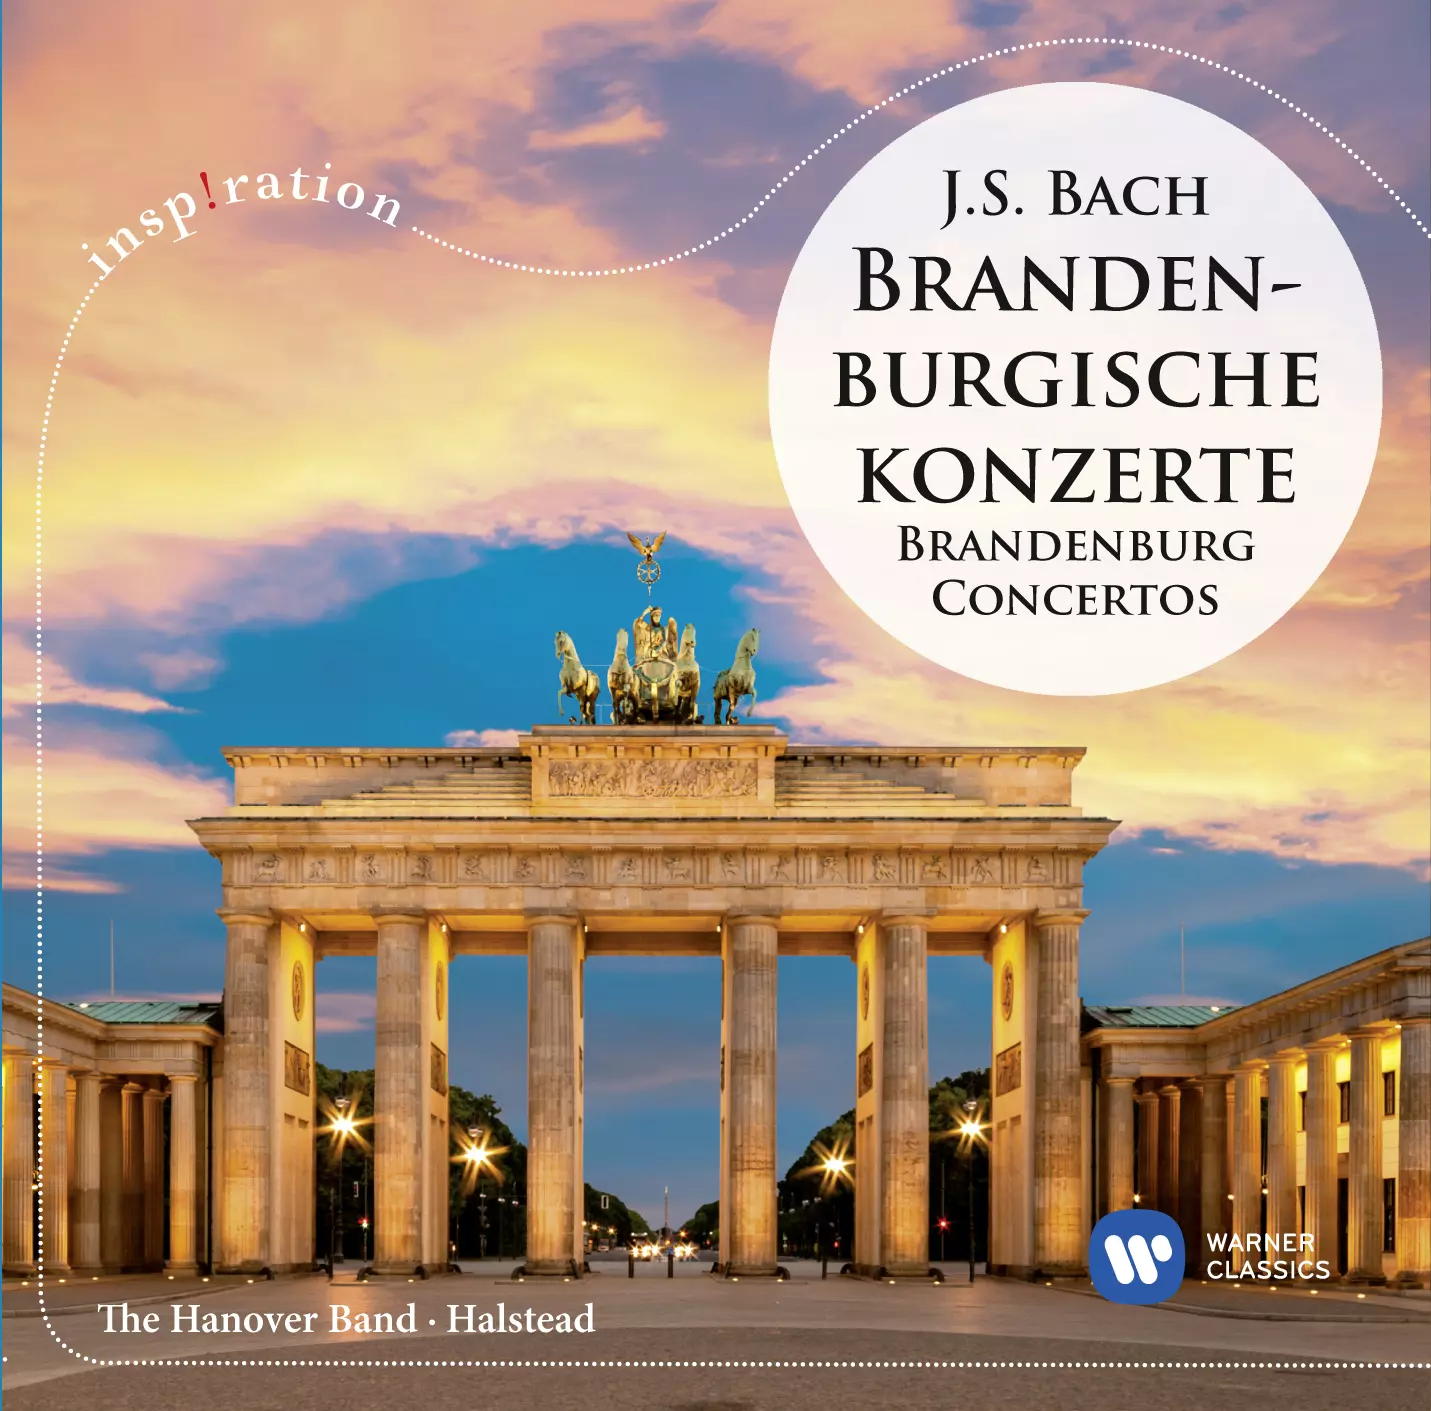 Brandenburg Concertos Inspiration